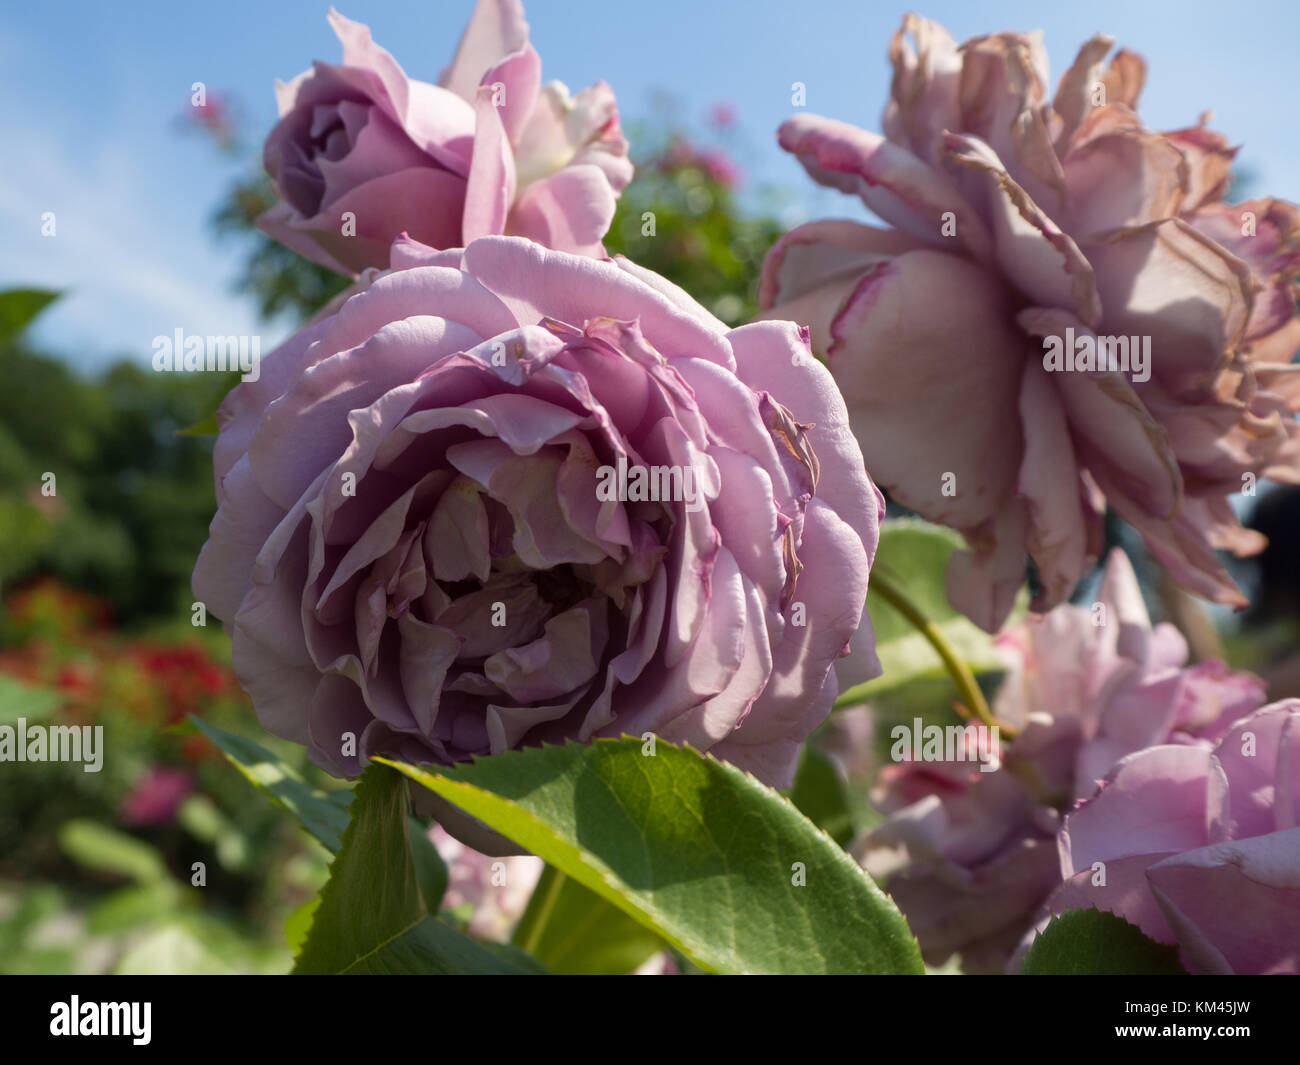 The lavender rose garden Stock Photo